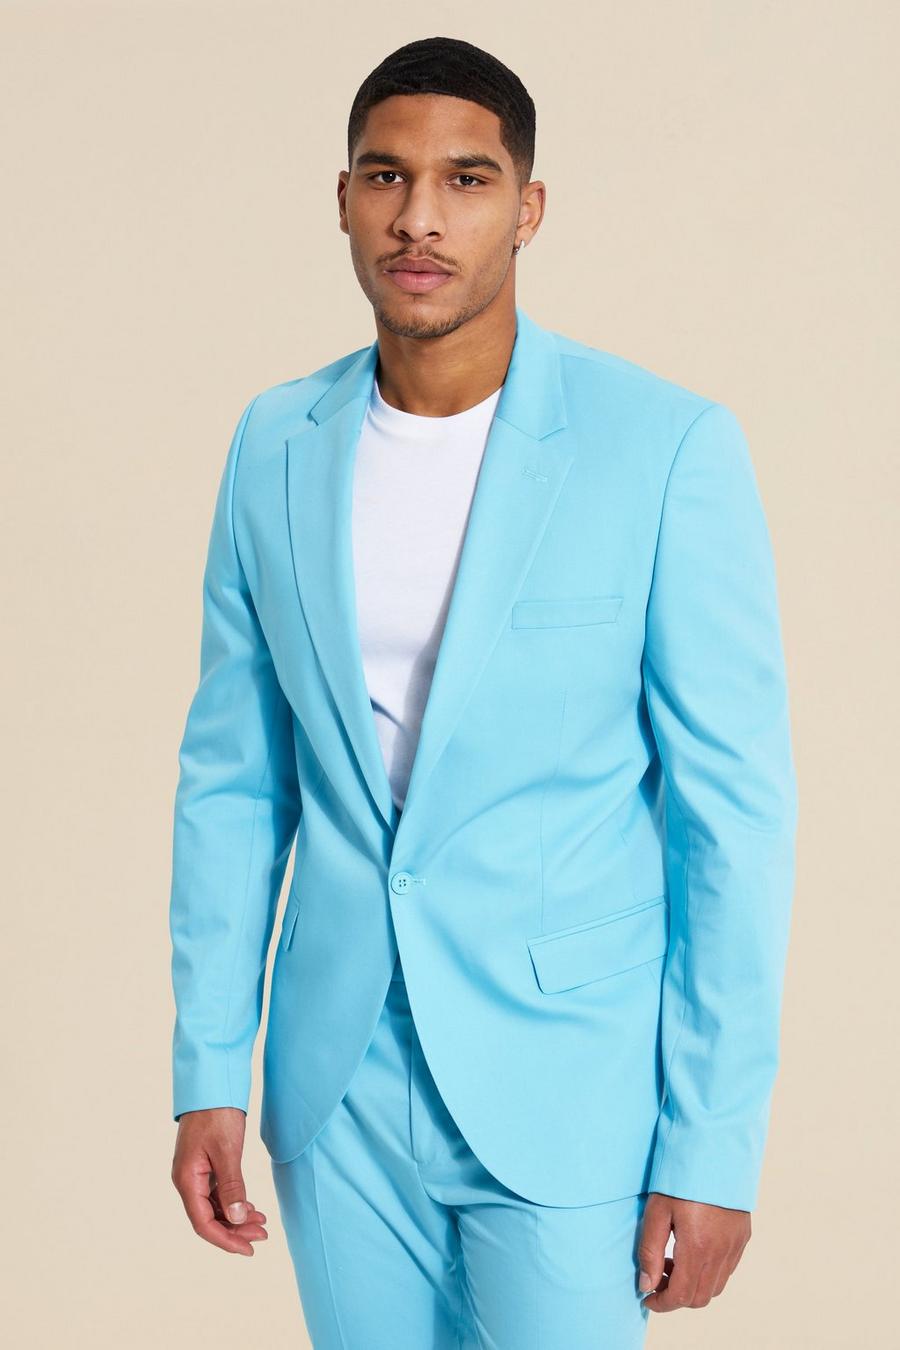 Light blue azzurro ז'קט חליפה בגזרה צרה עם רכיסה אחת, לגברים גבוהים